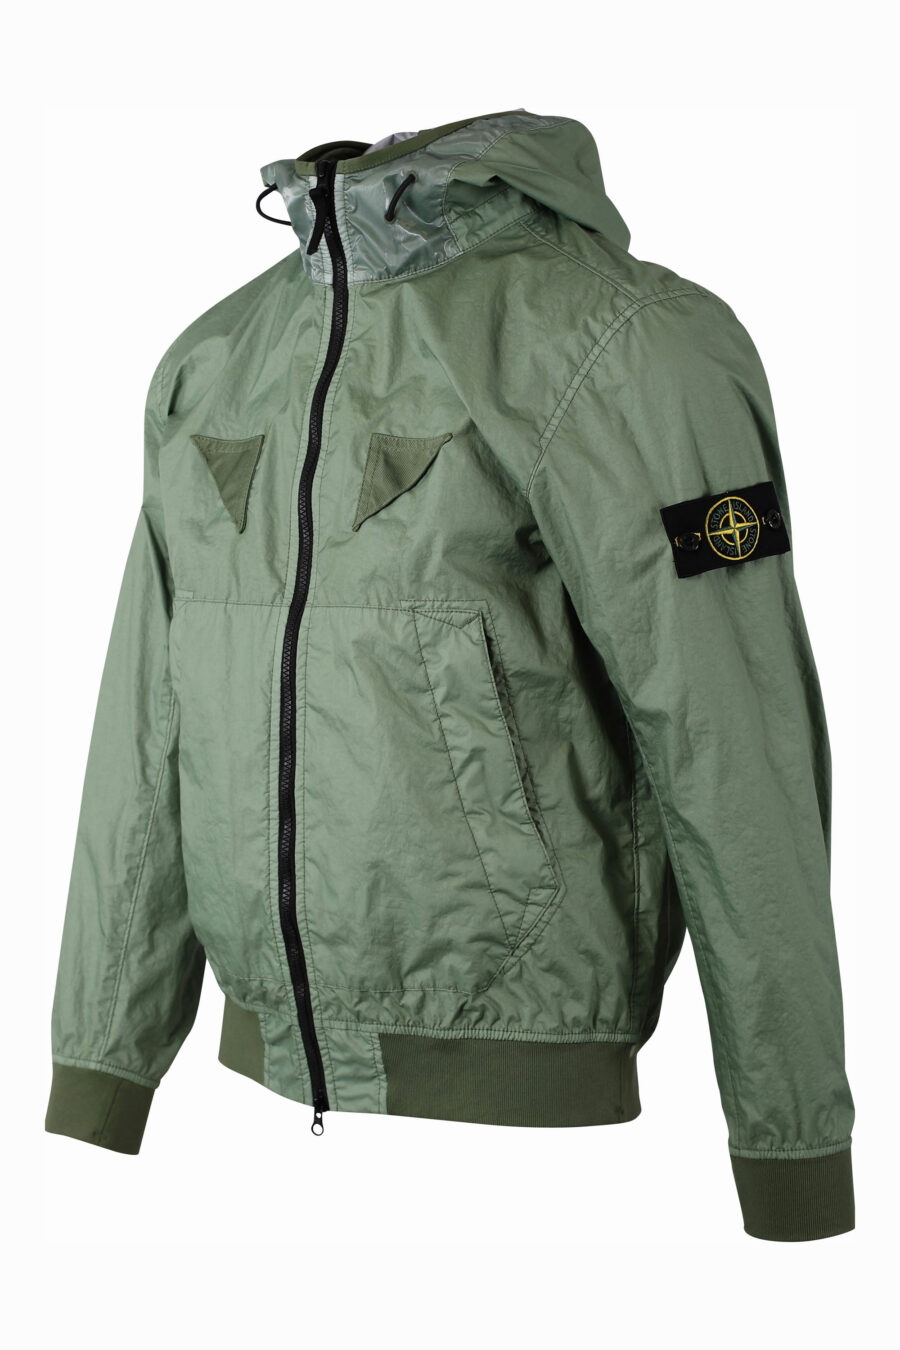 Grüne Jacke mit Kapuze und Logoaufnäher - IMG 1071